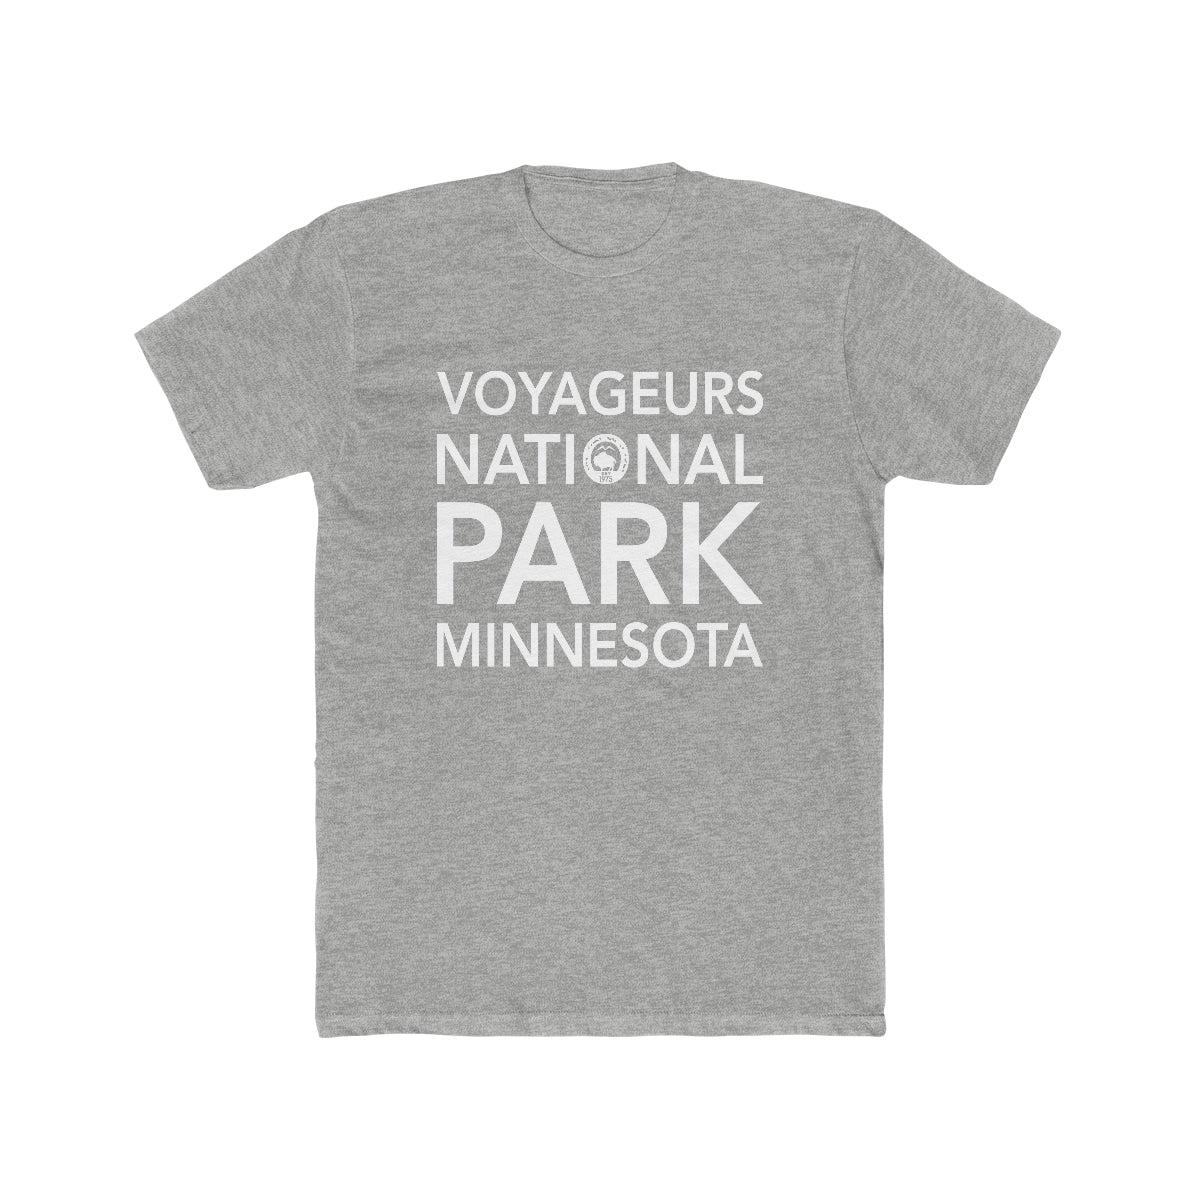 Voyageurs National Park T-Shirt Block Text